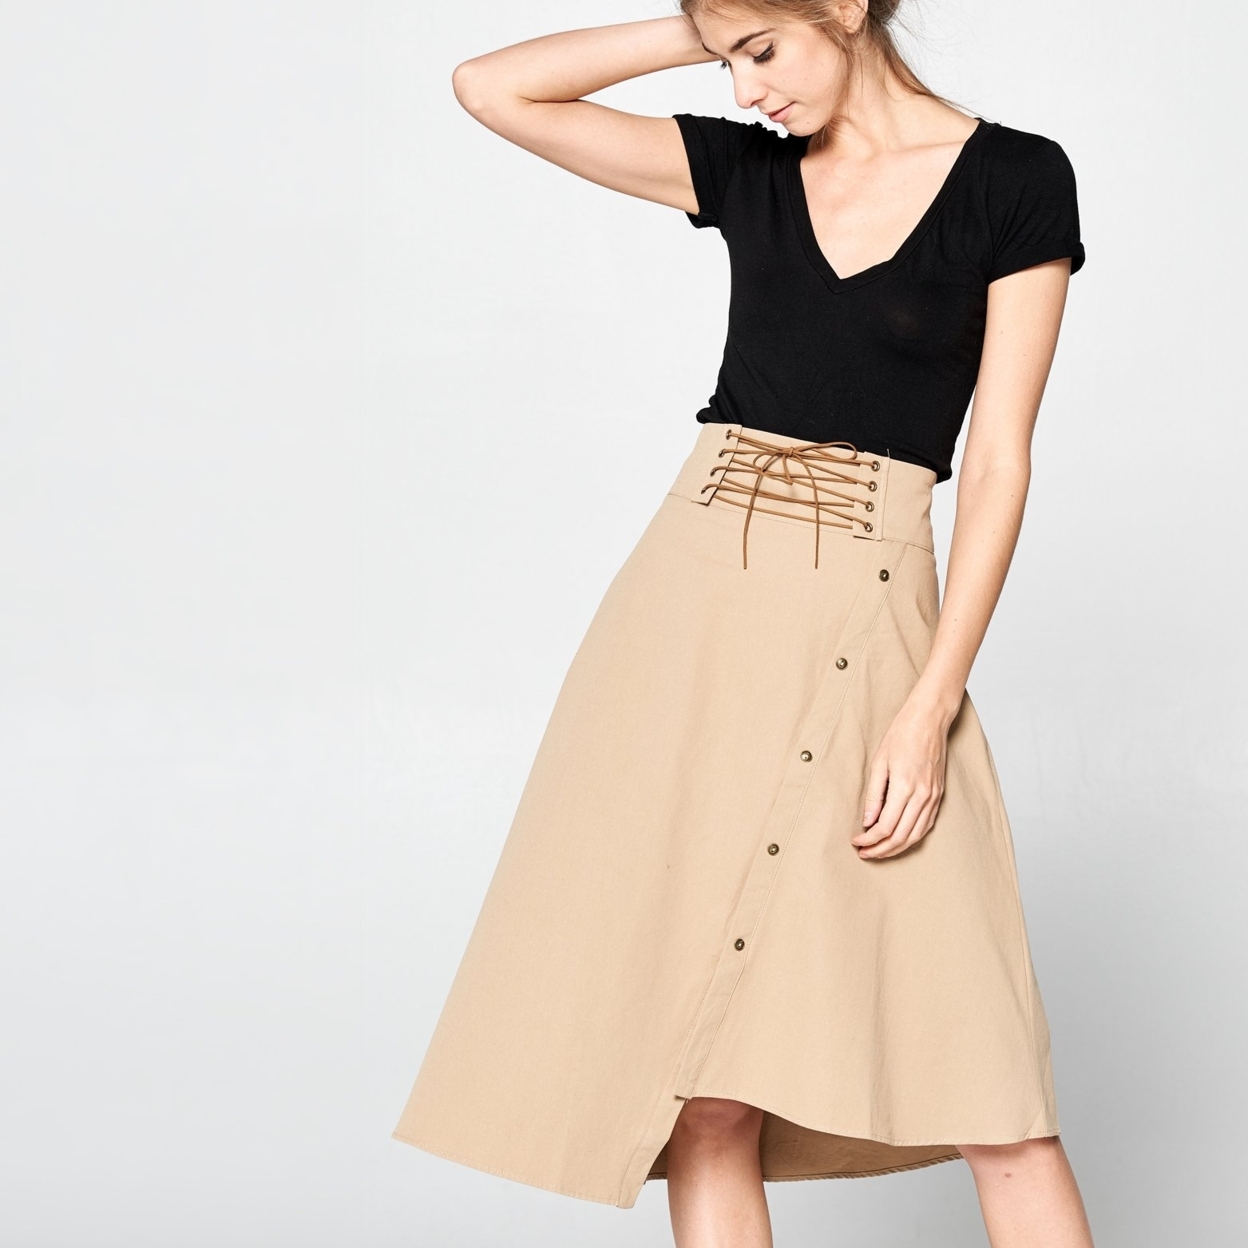 Uneven Cotton Twill Skirt - Taupe, Medium (8-10)